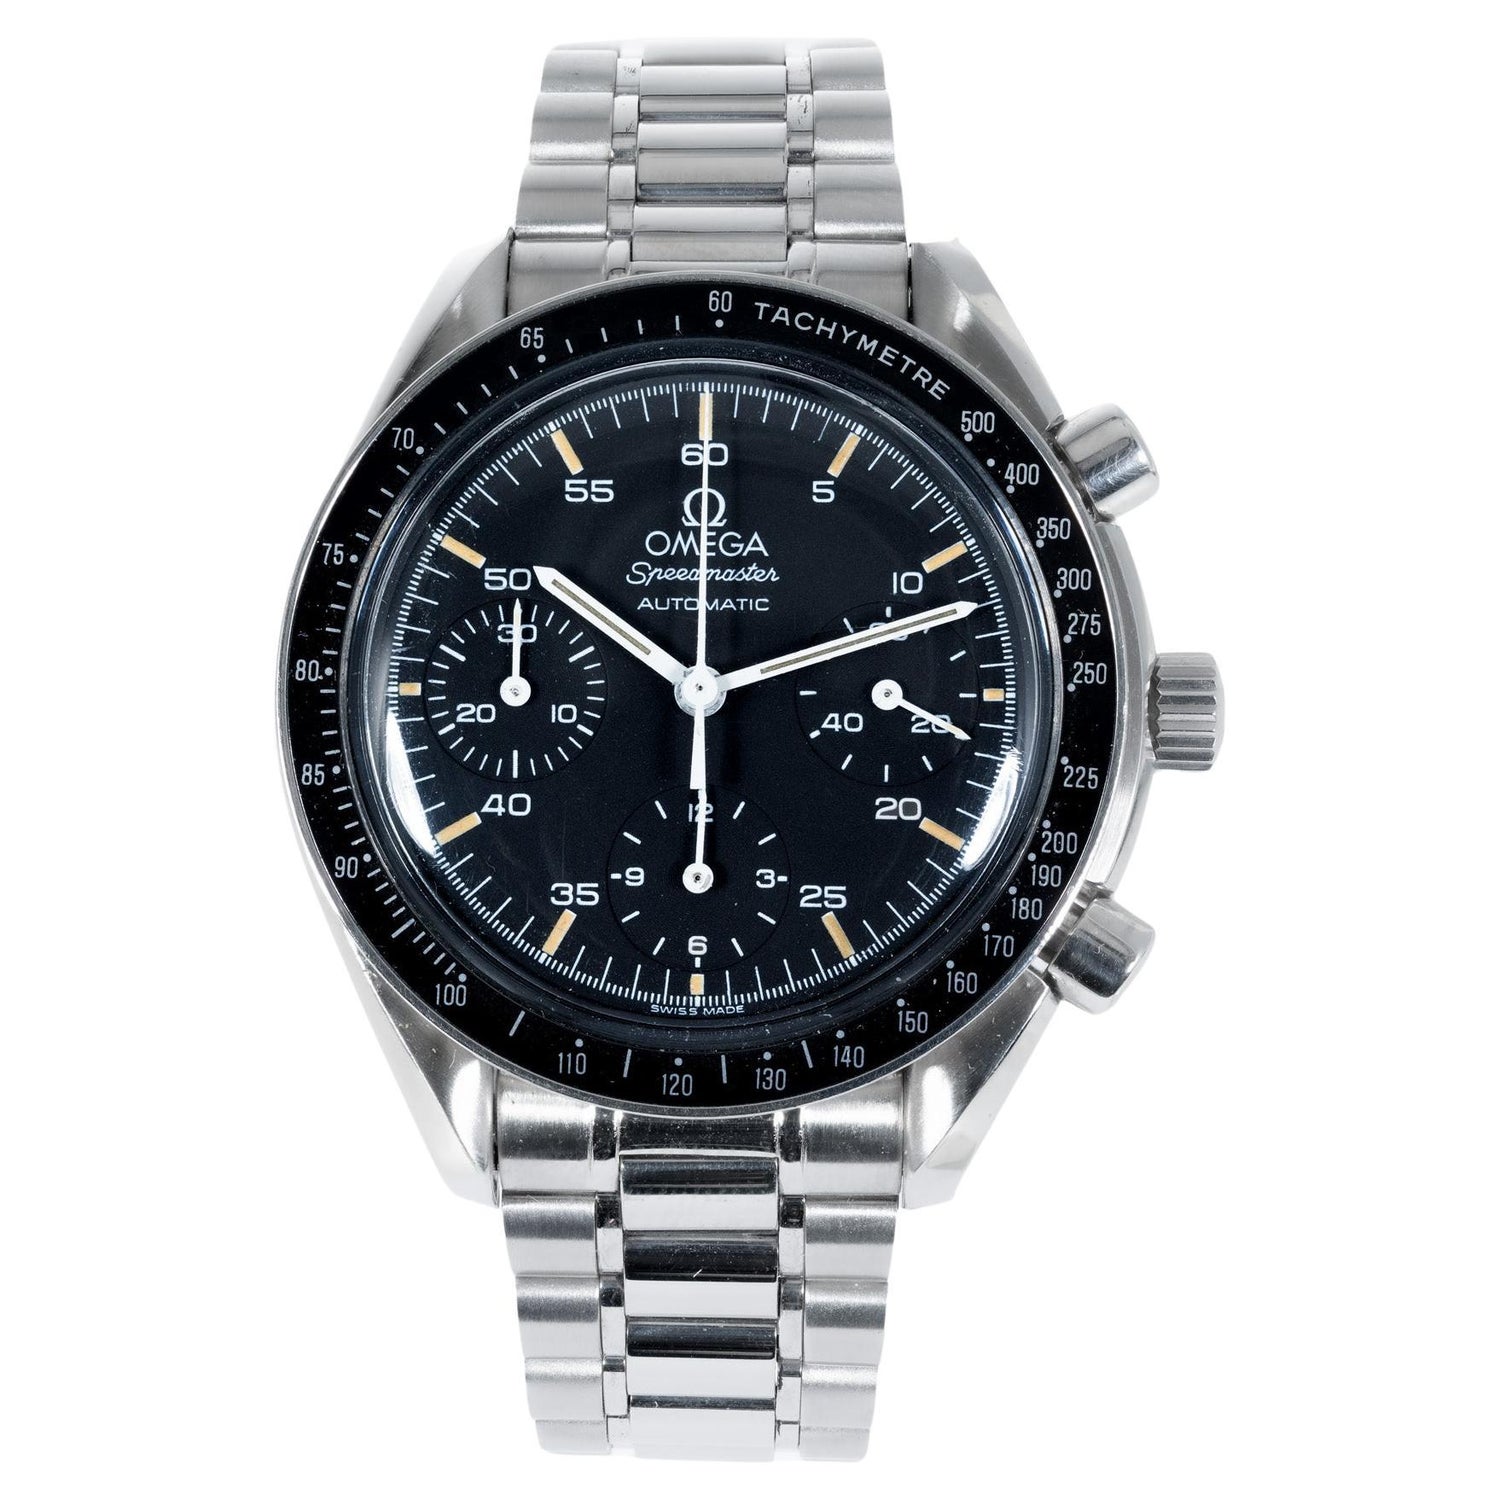 https://a.1stdibscdn.com/omega-speedmaster-reduced-steel-mens-chronograph-wristwatch-for-sale/j_548/j_206067421697574888429/j_20606742_1697574889001_bg_processed.jpg?width=1500